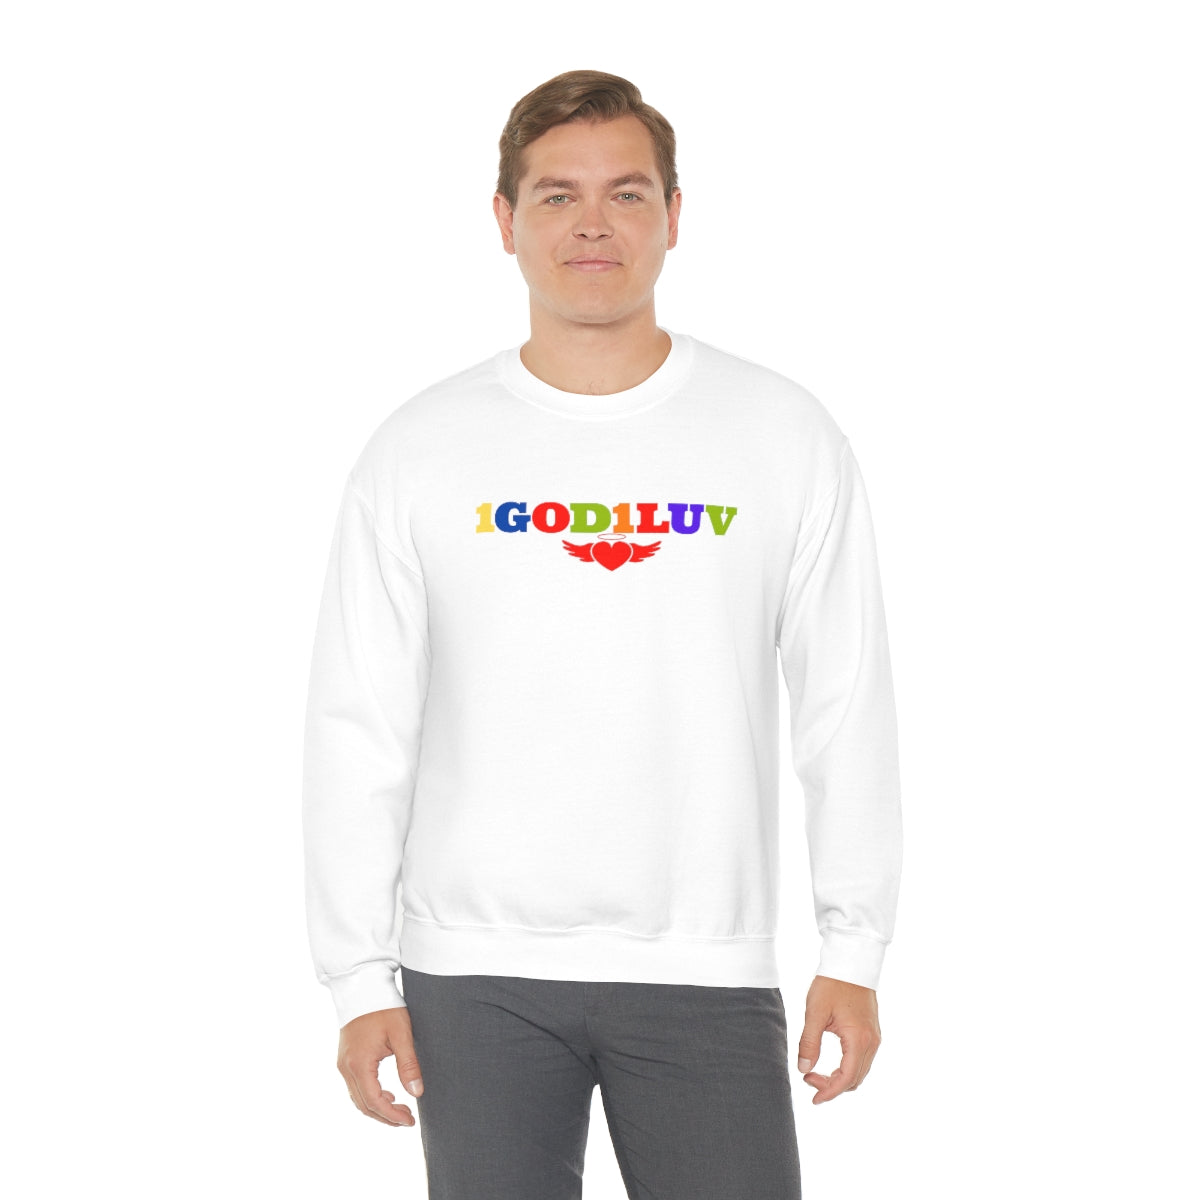 1God1LUV Unisex Heavy Blend™ Crewneck Sweatshirt